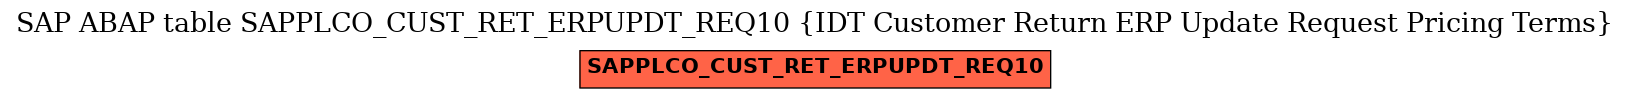 E-R Diagram for table SAPPLCO_CUST_RET_ERPUPDT_REQ10 (IDT Customer Return ERP Update Request Pricing Terms)